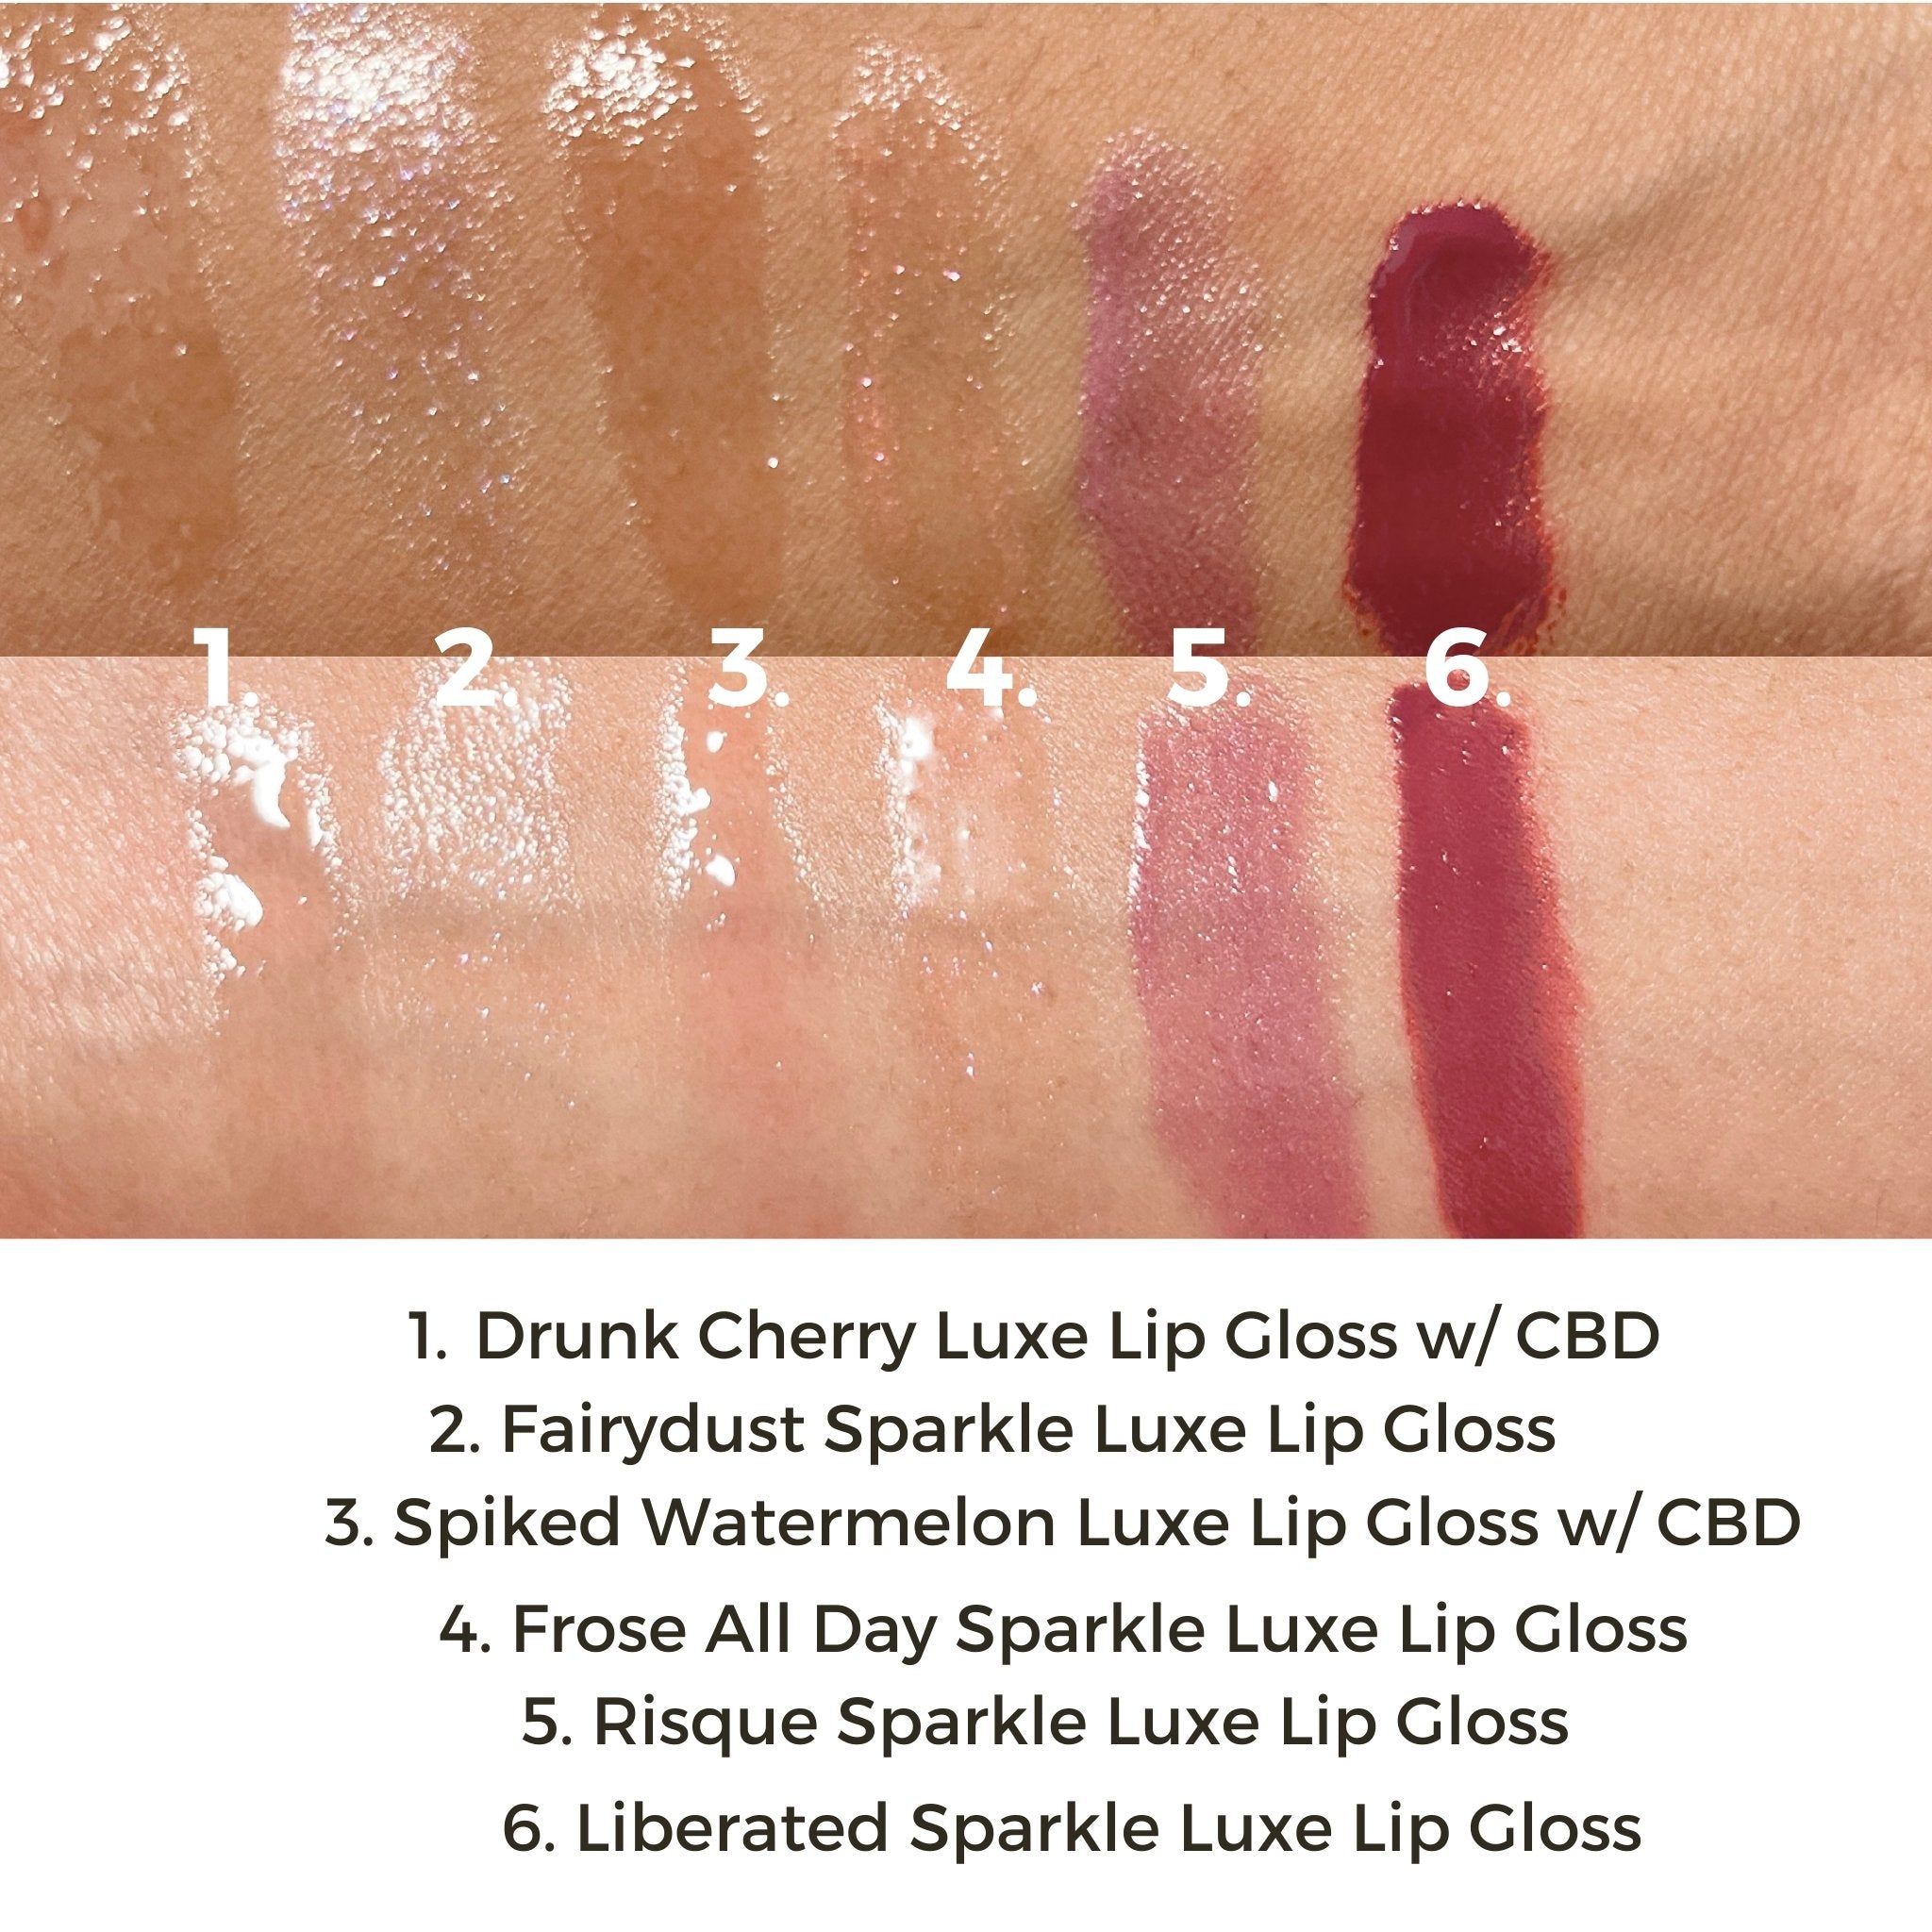 Spiked Watermelon Luxe Lip Gloss w/ CBD - Sassy Jones